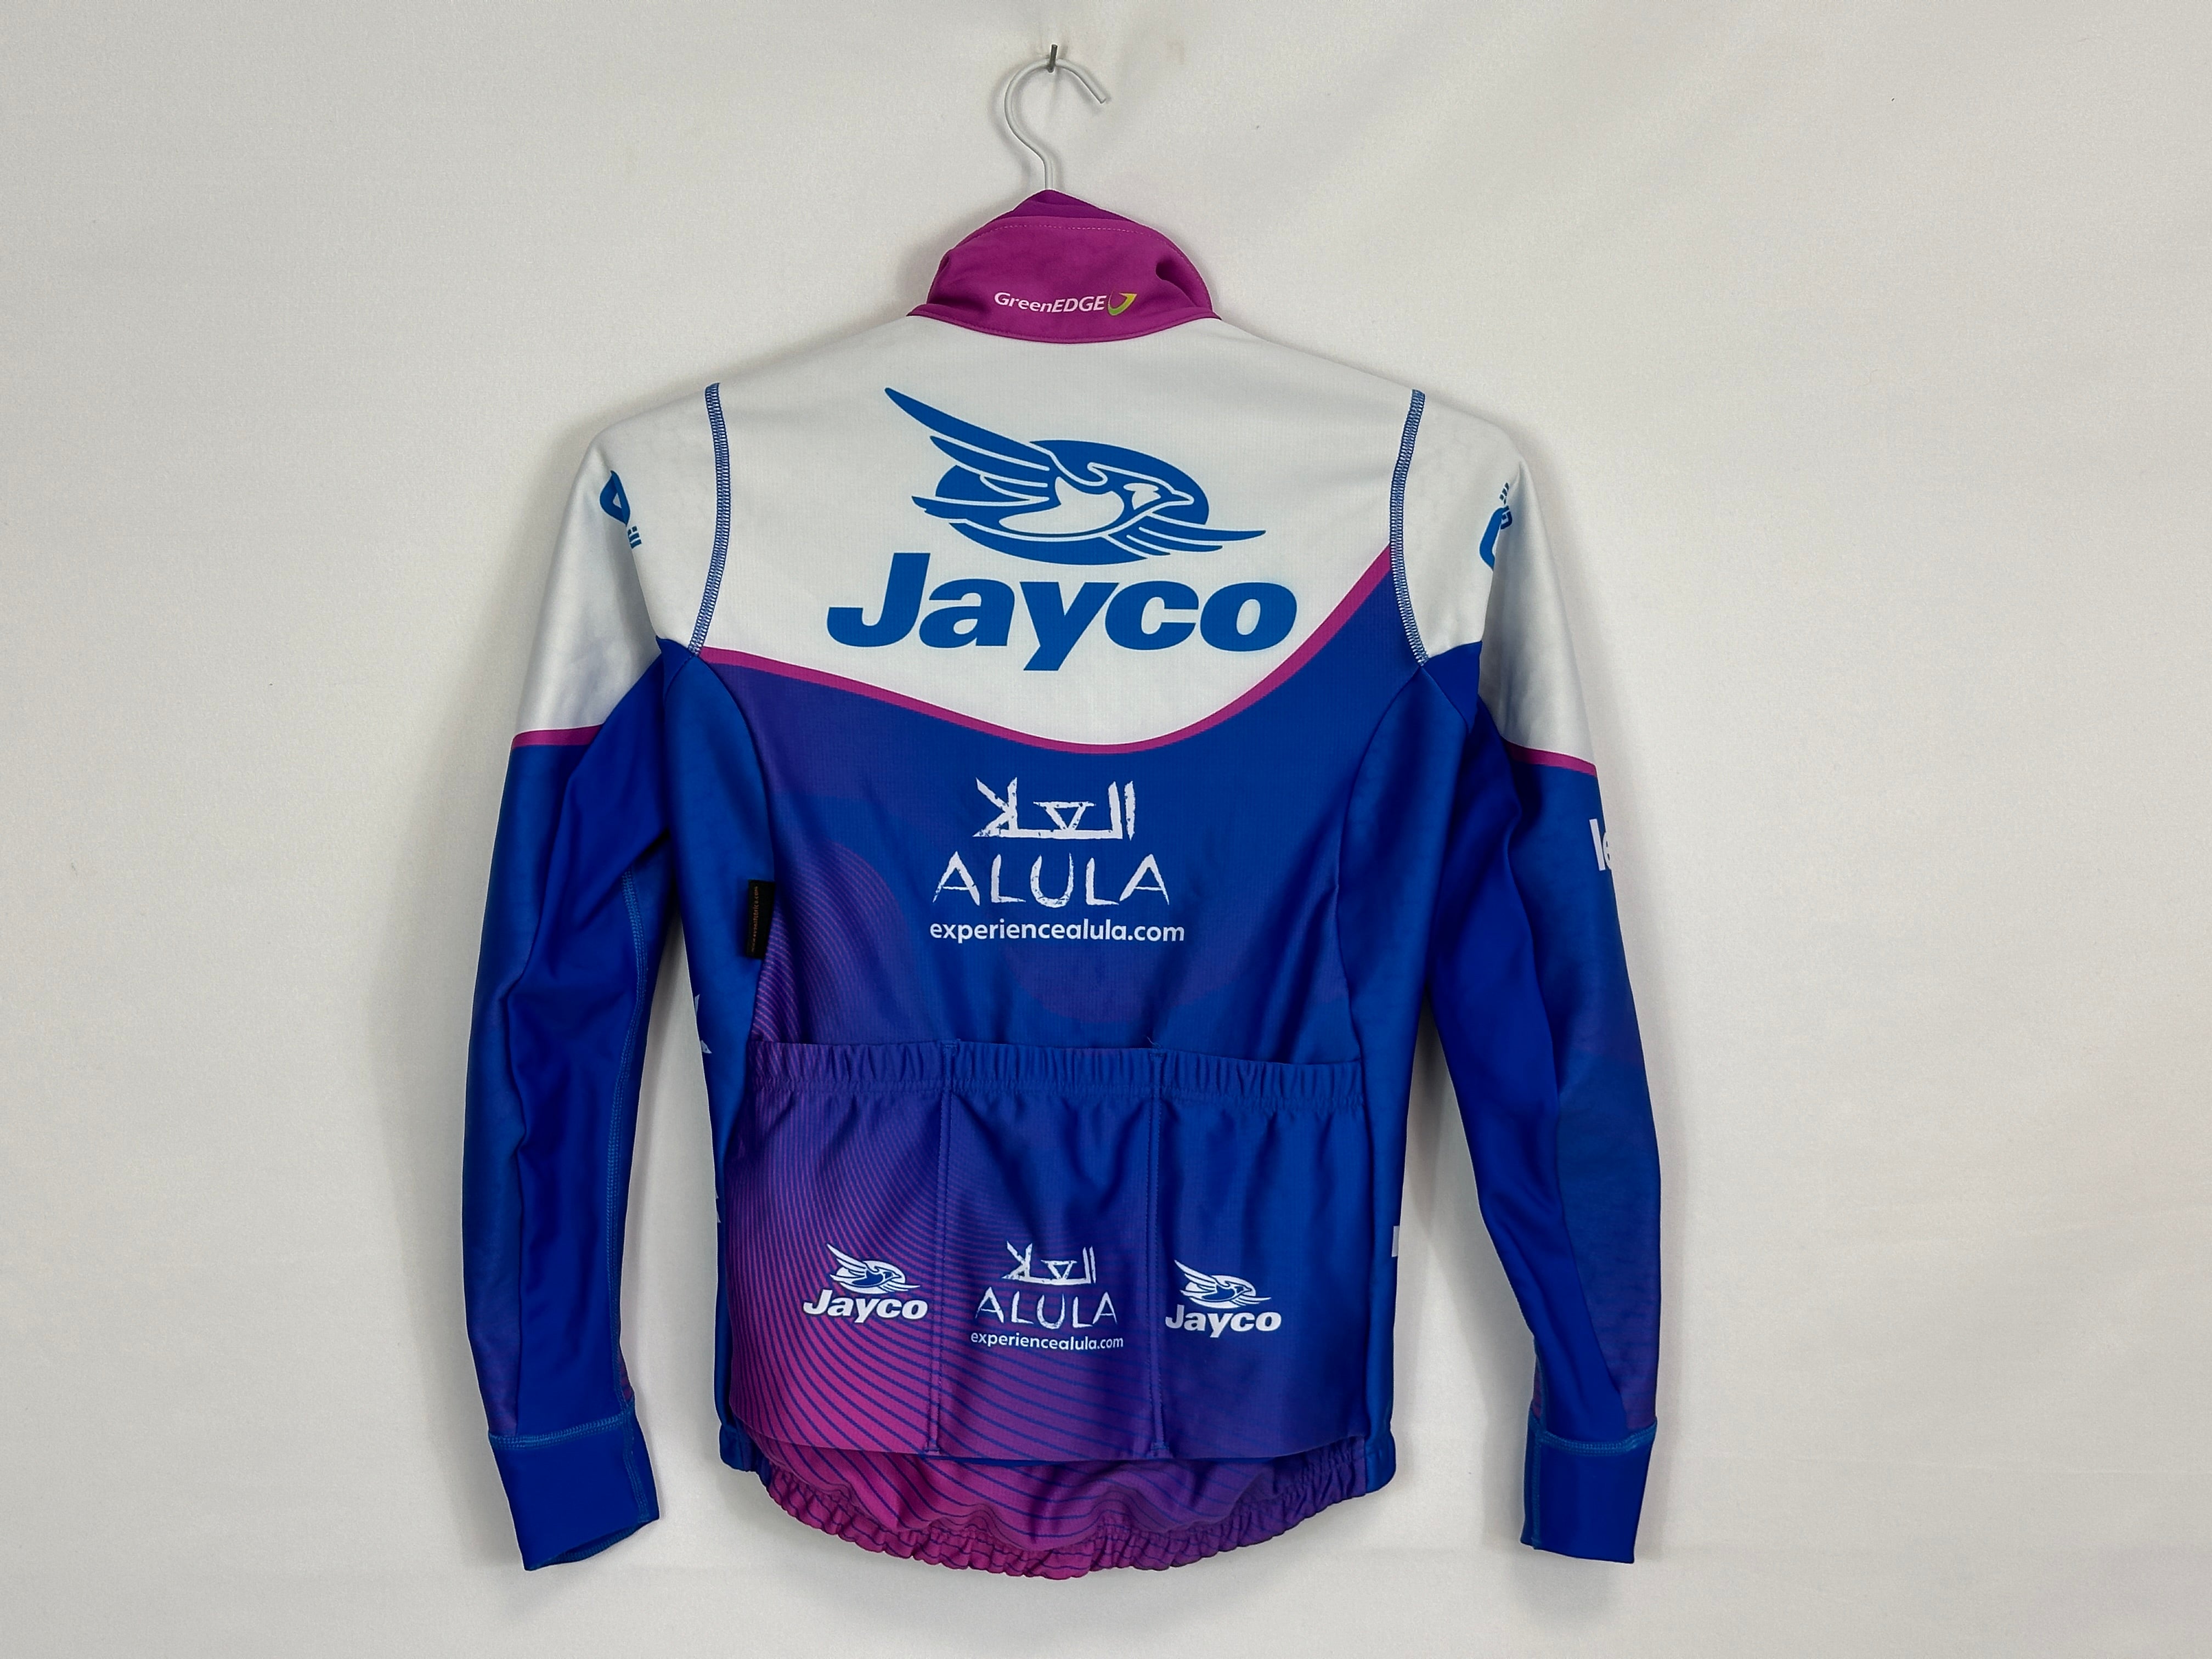 Team Jayco Alula - L/S Softshell Thermal Jacket by Alé